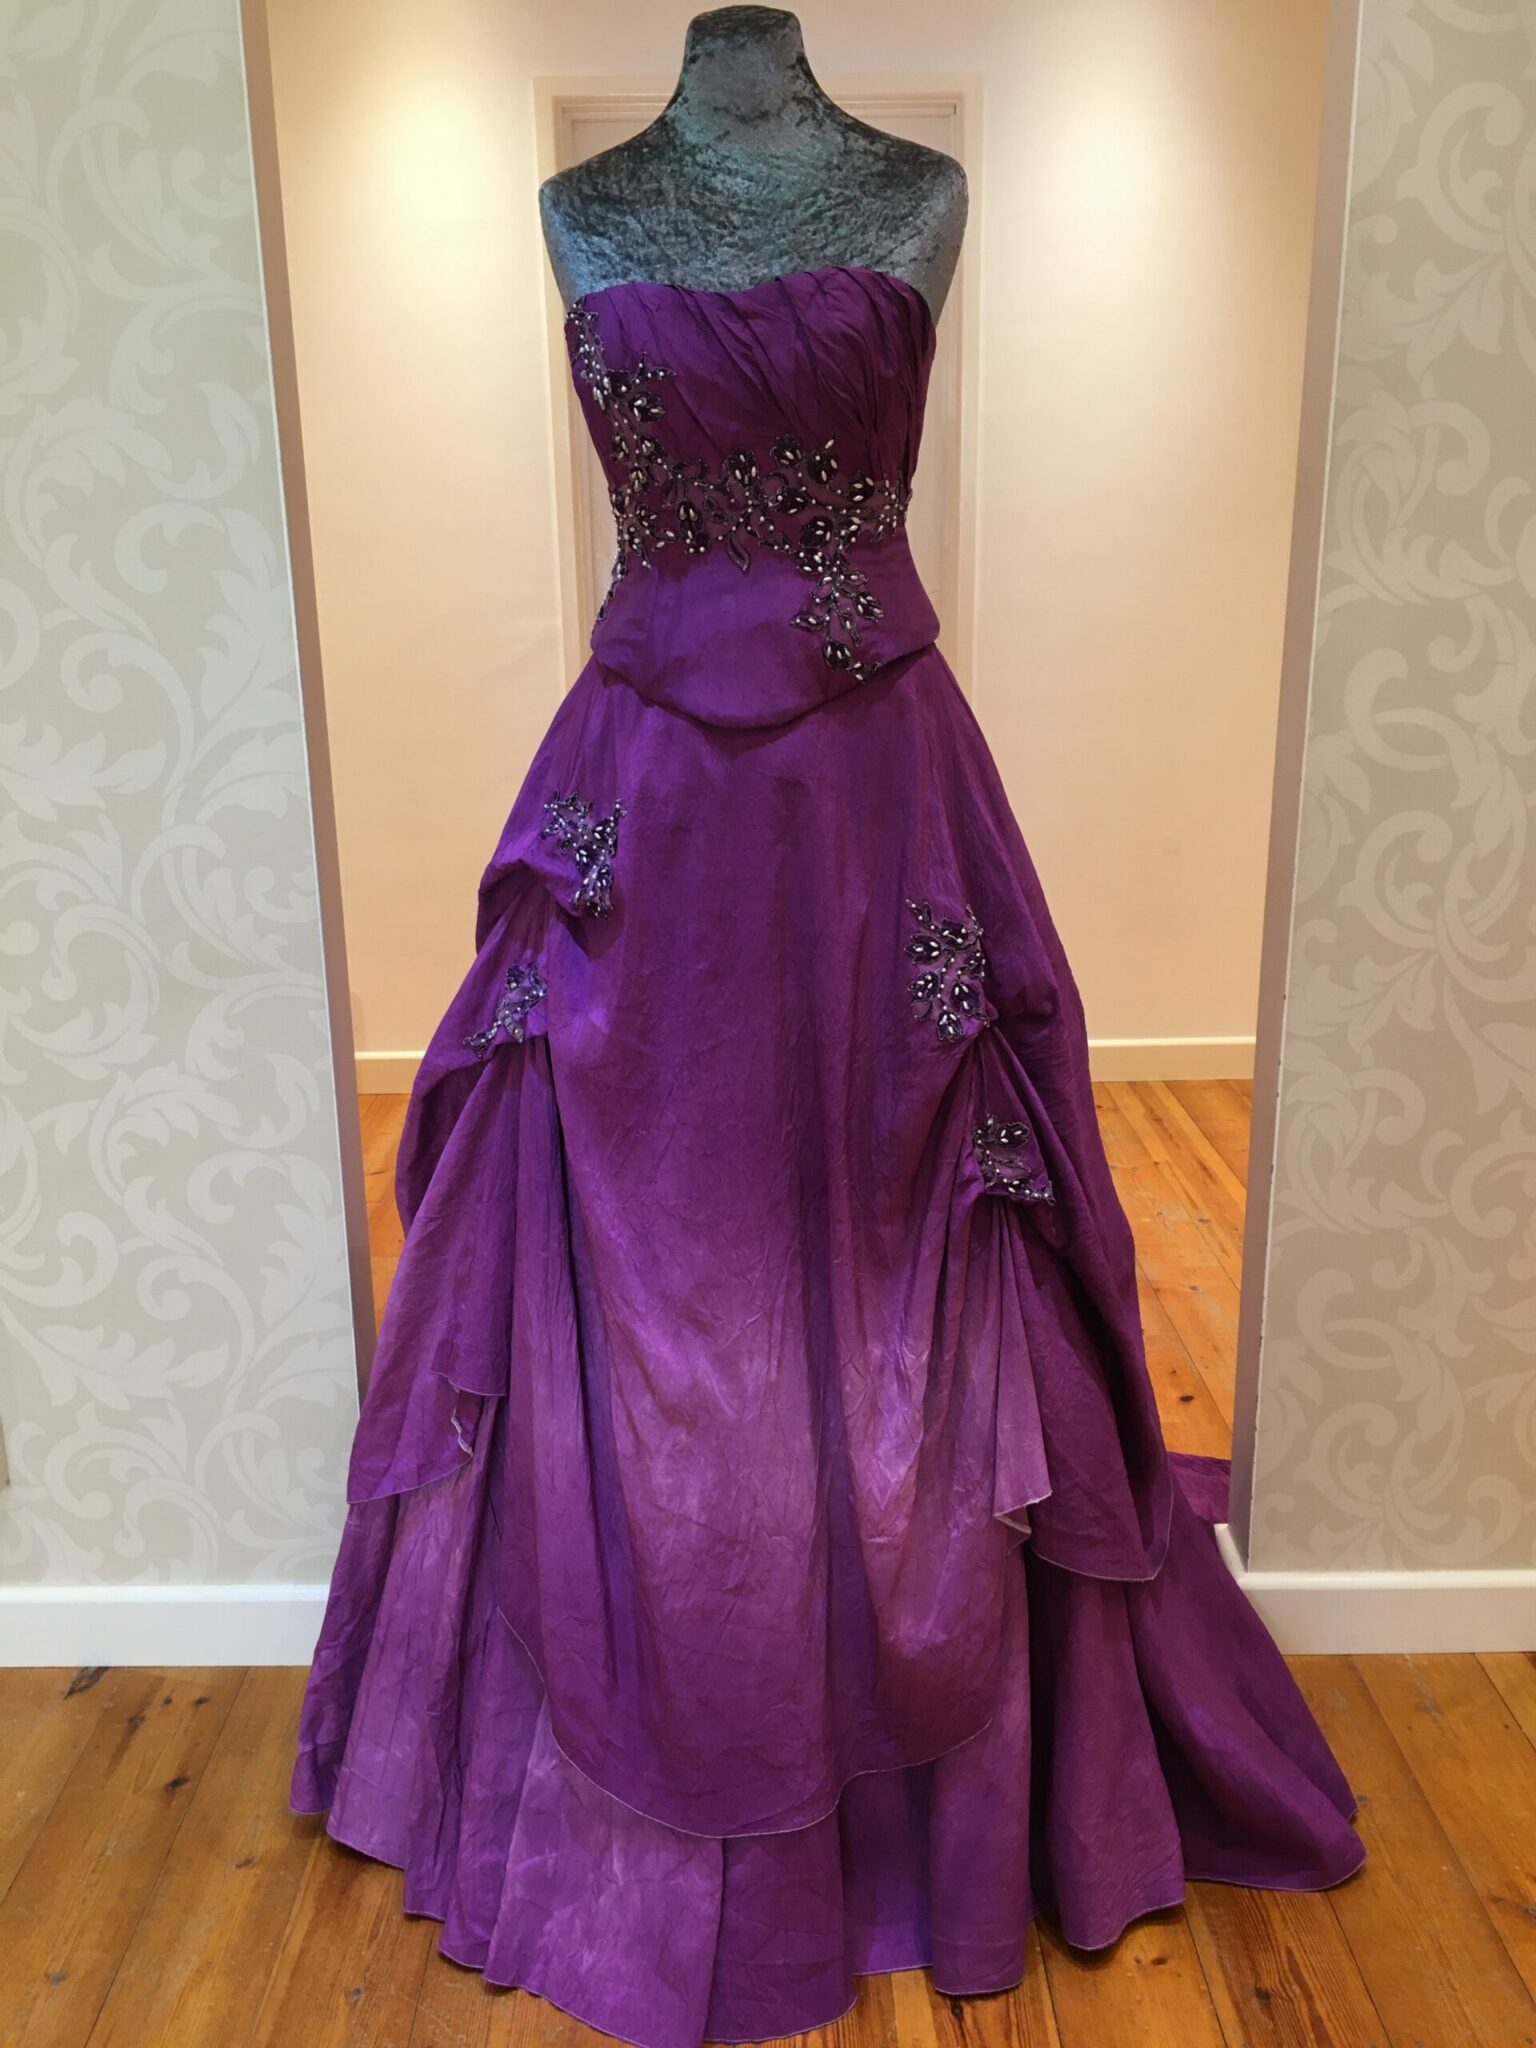 Vintage purple wedding gown